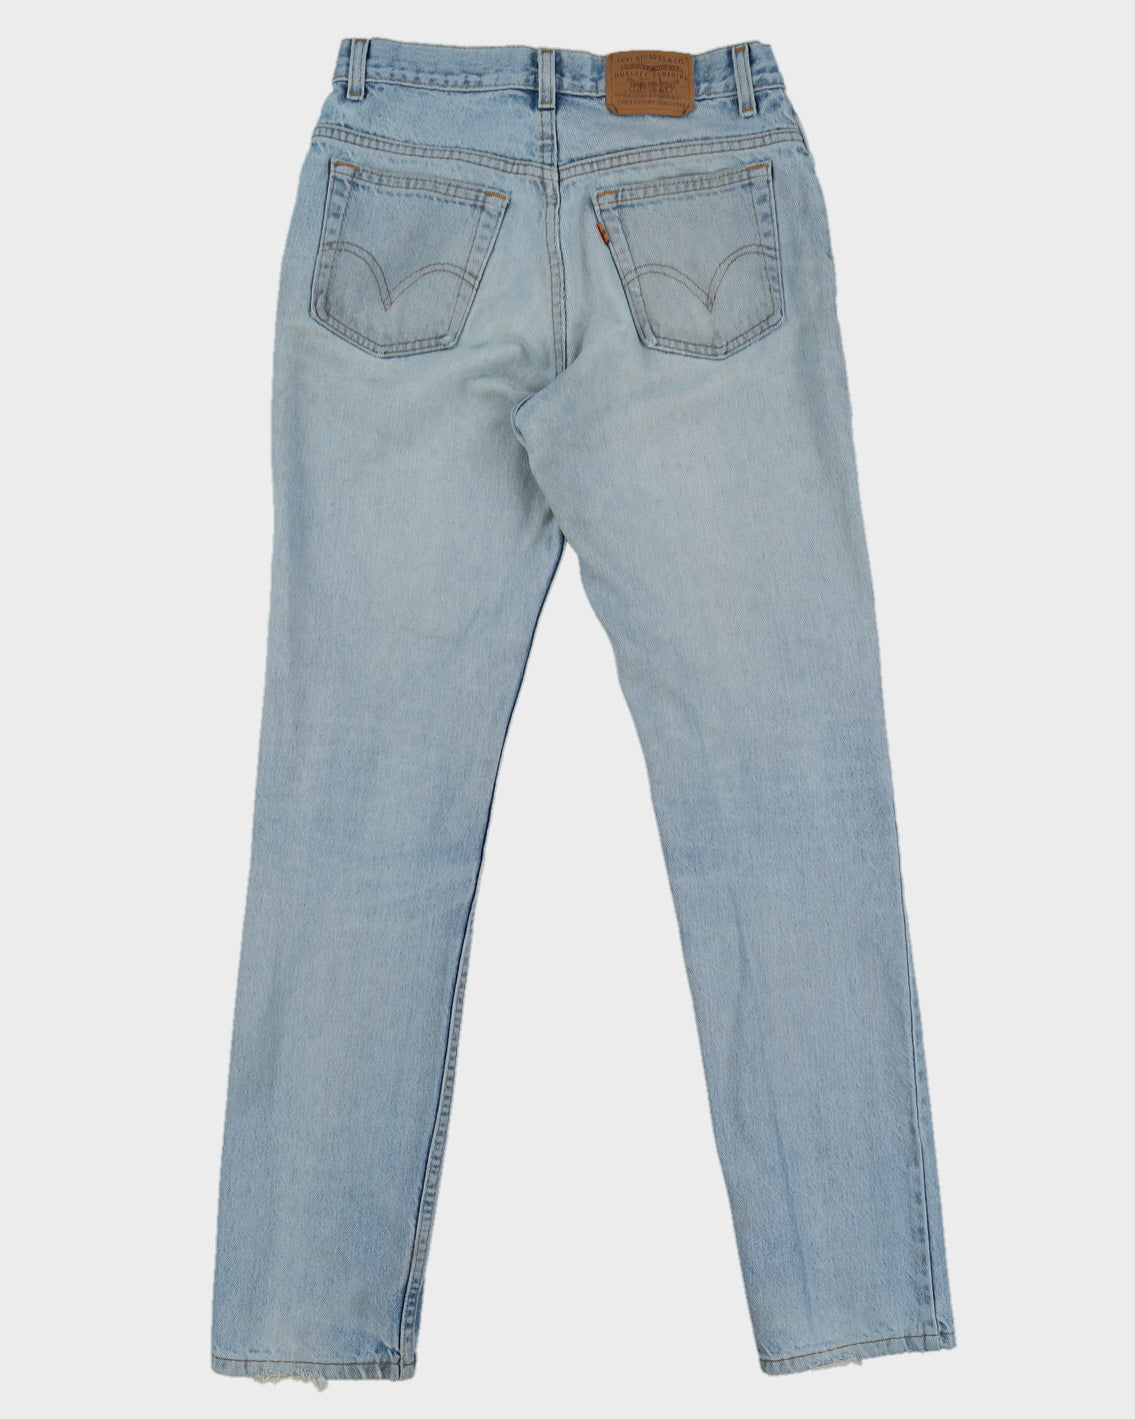 Vintage 80s Levi's Blue Light Washed Orange Tab Jeans - W29 L32